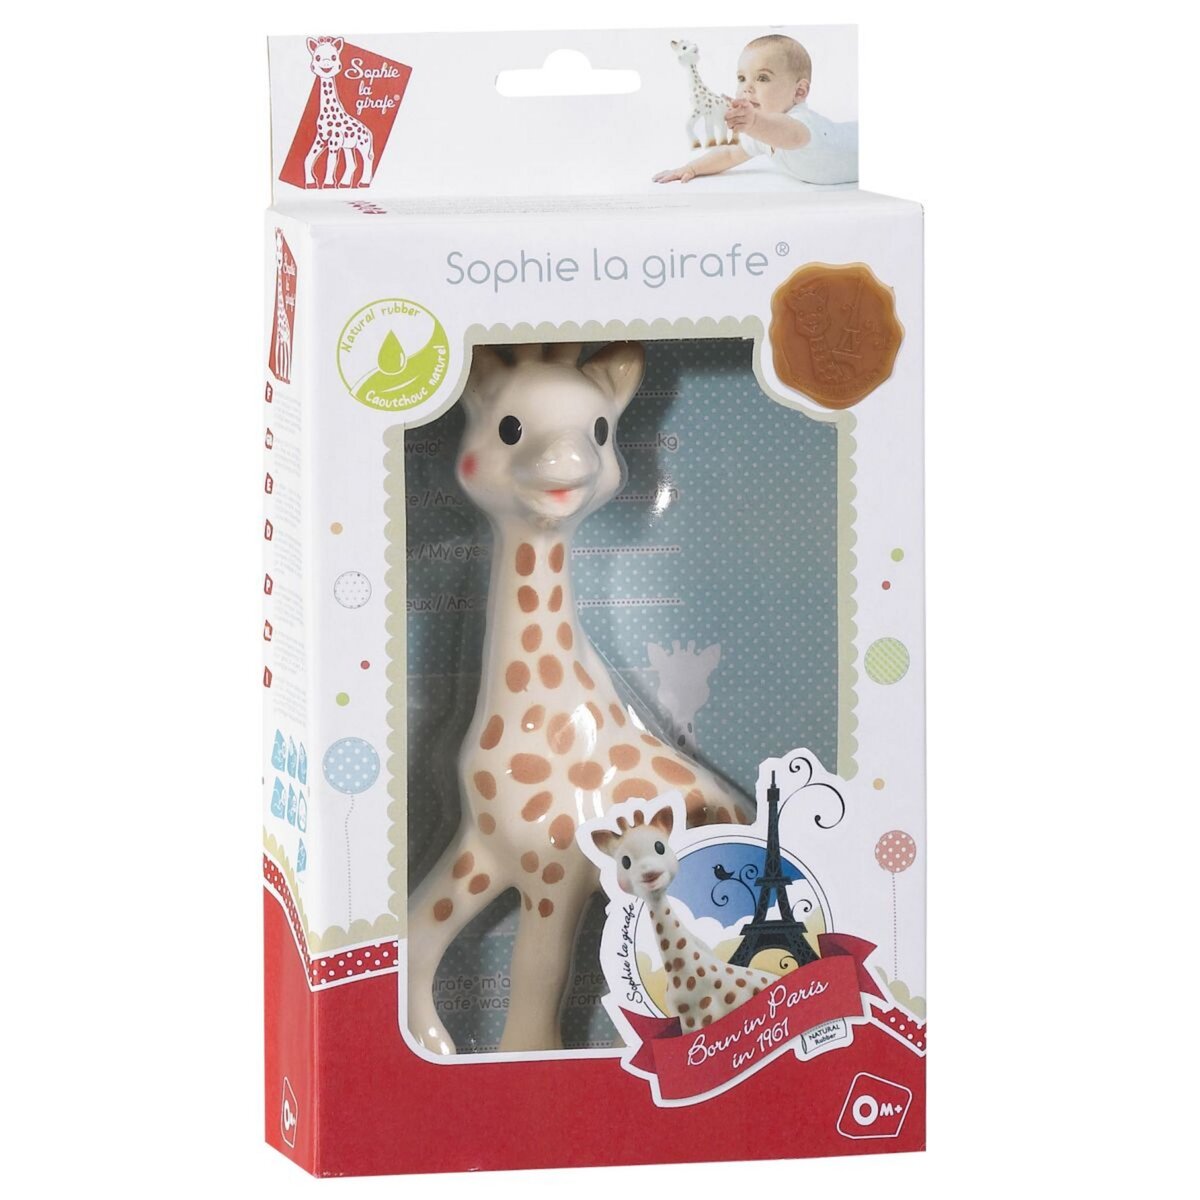 Sophie la Girafe - Coffret Cadeau Naissance Sophie la Girafe +